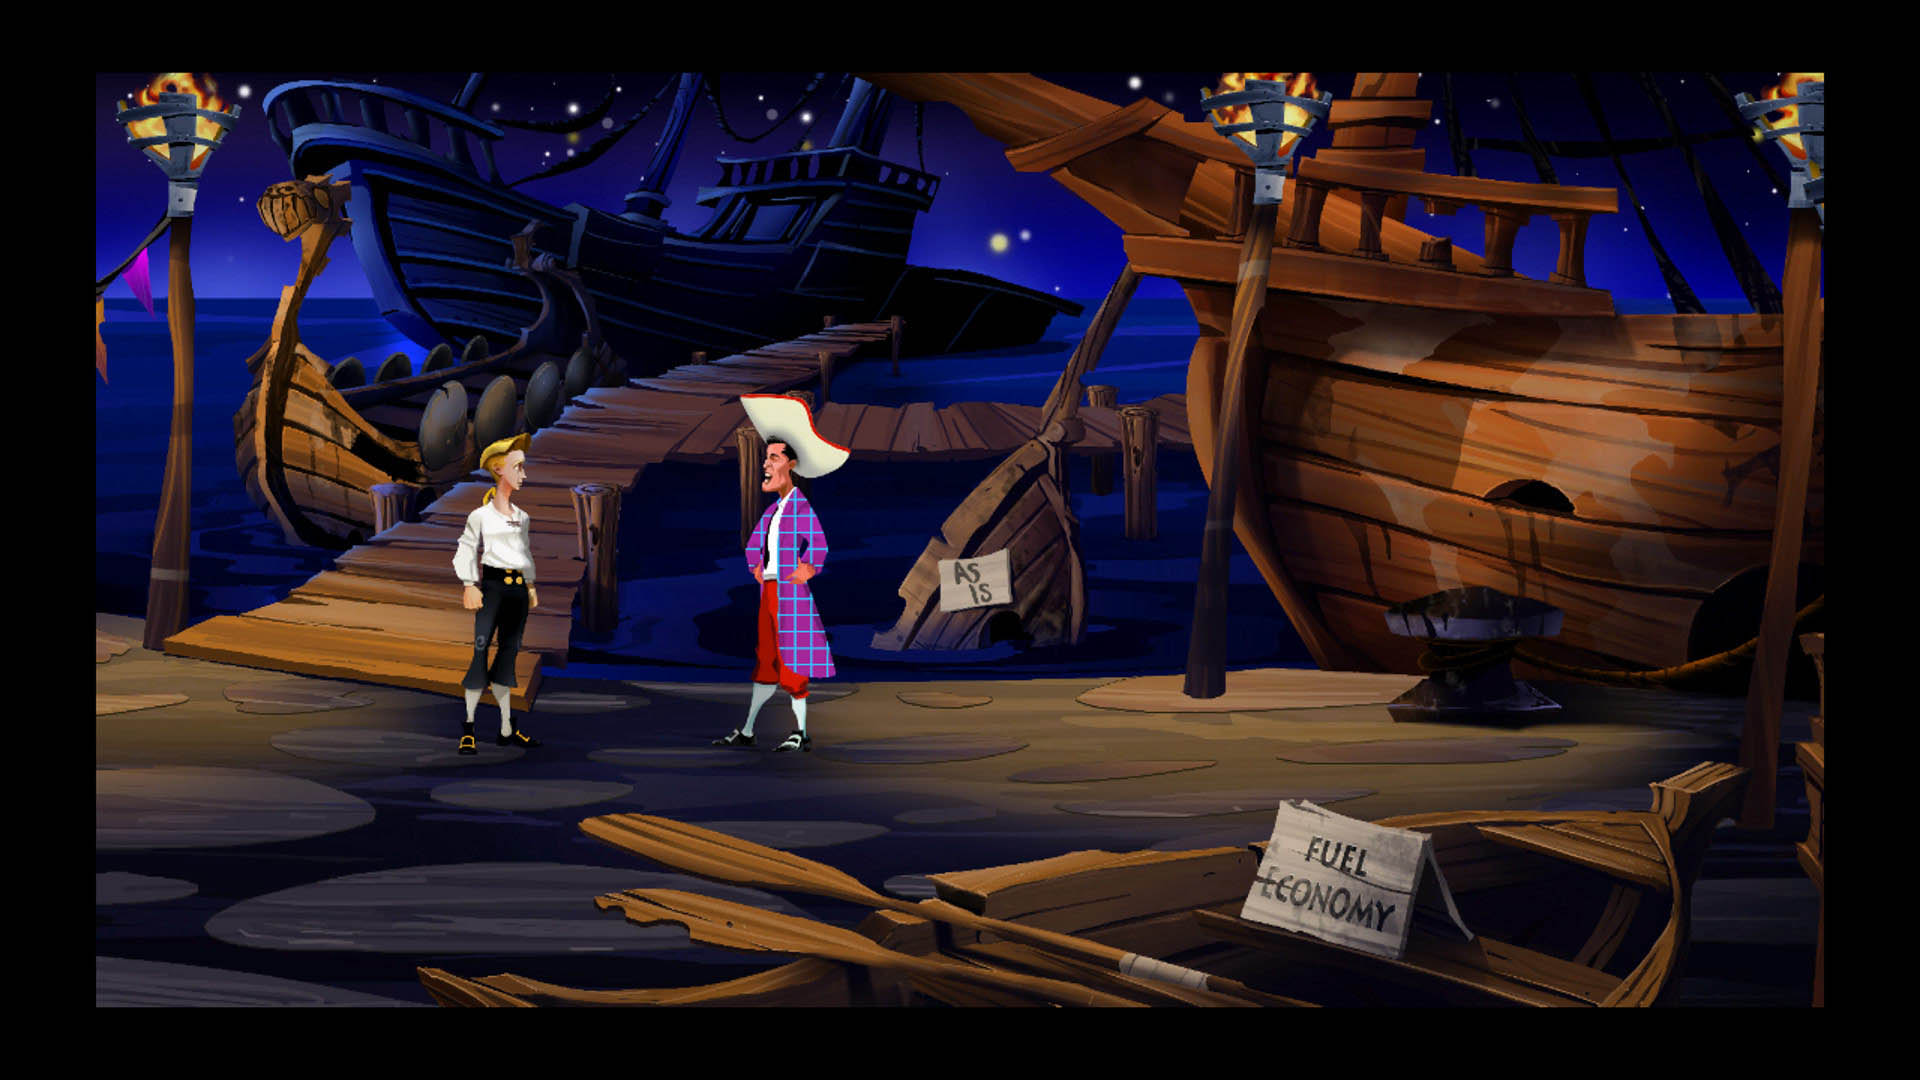 A gameplay screenshot from The Secret of Monkey Island